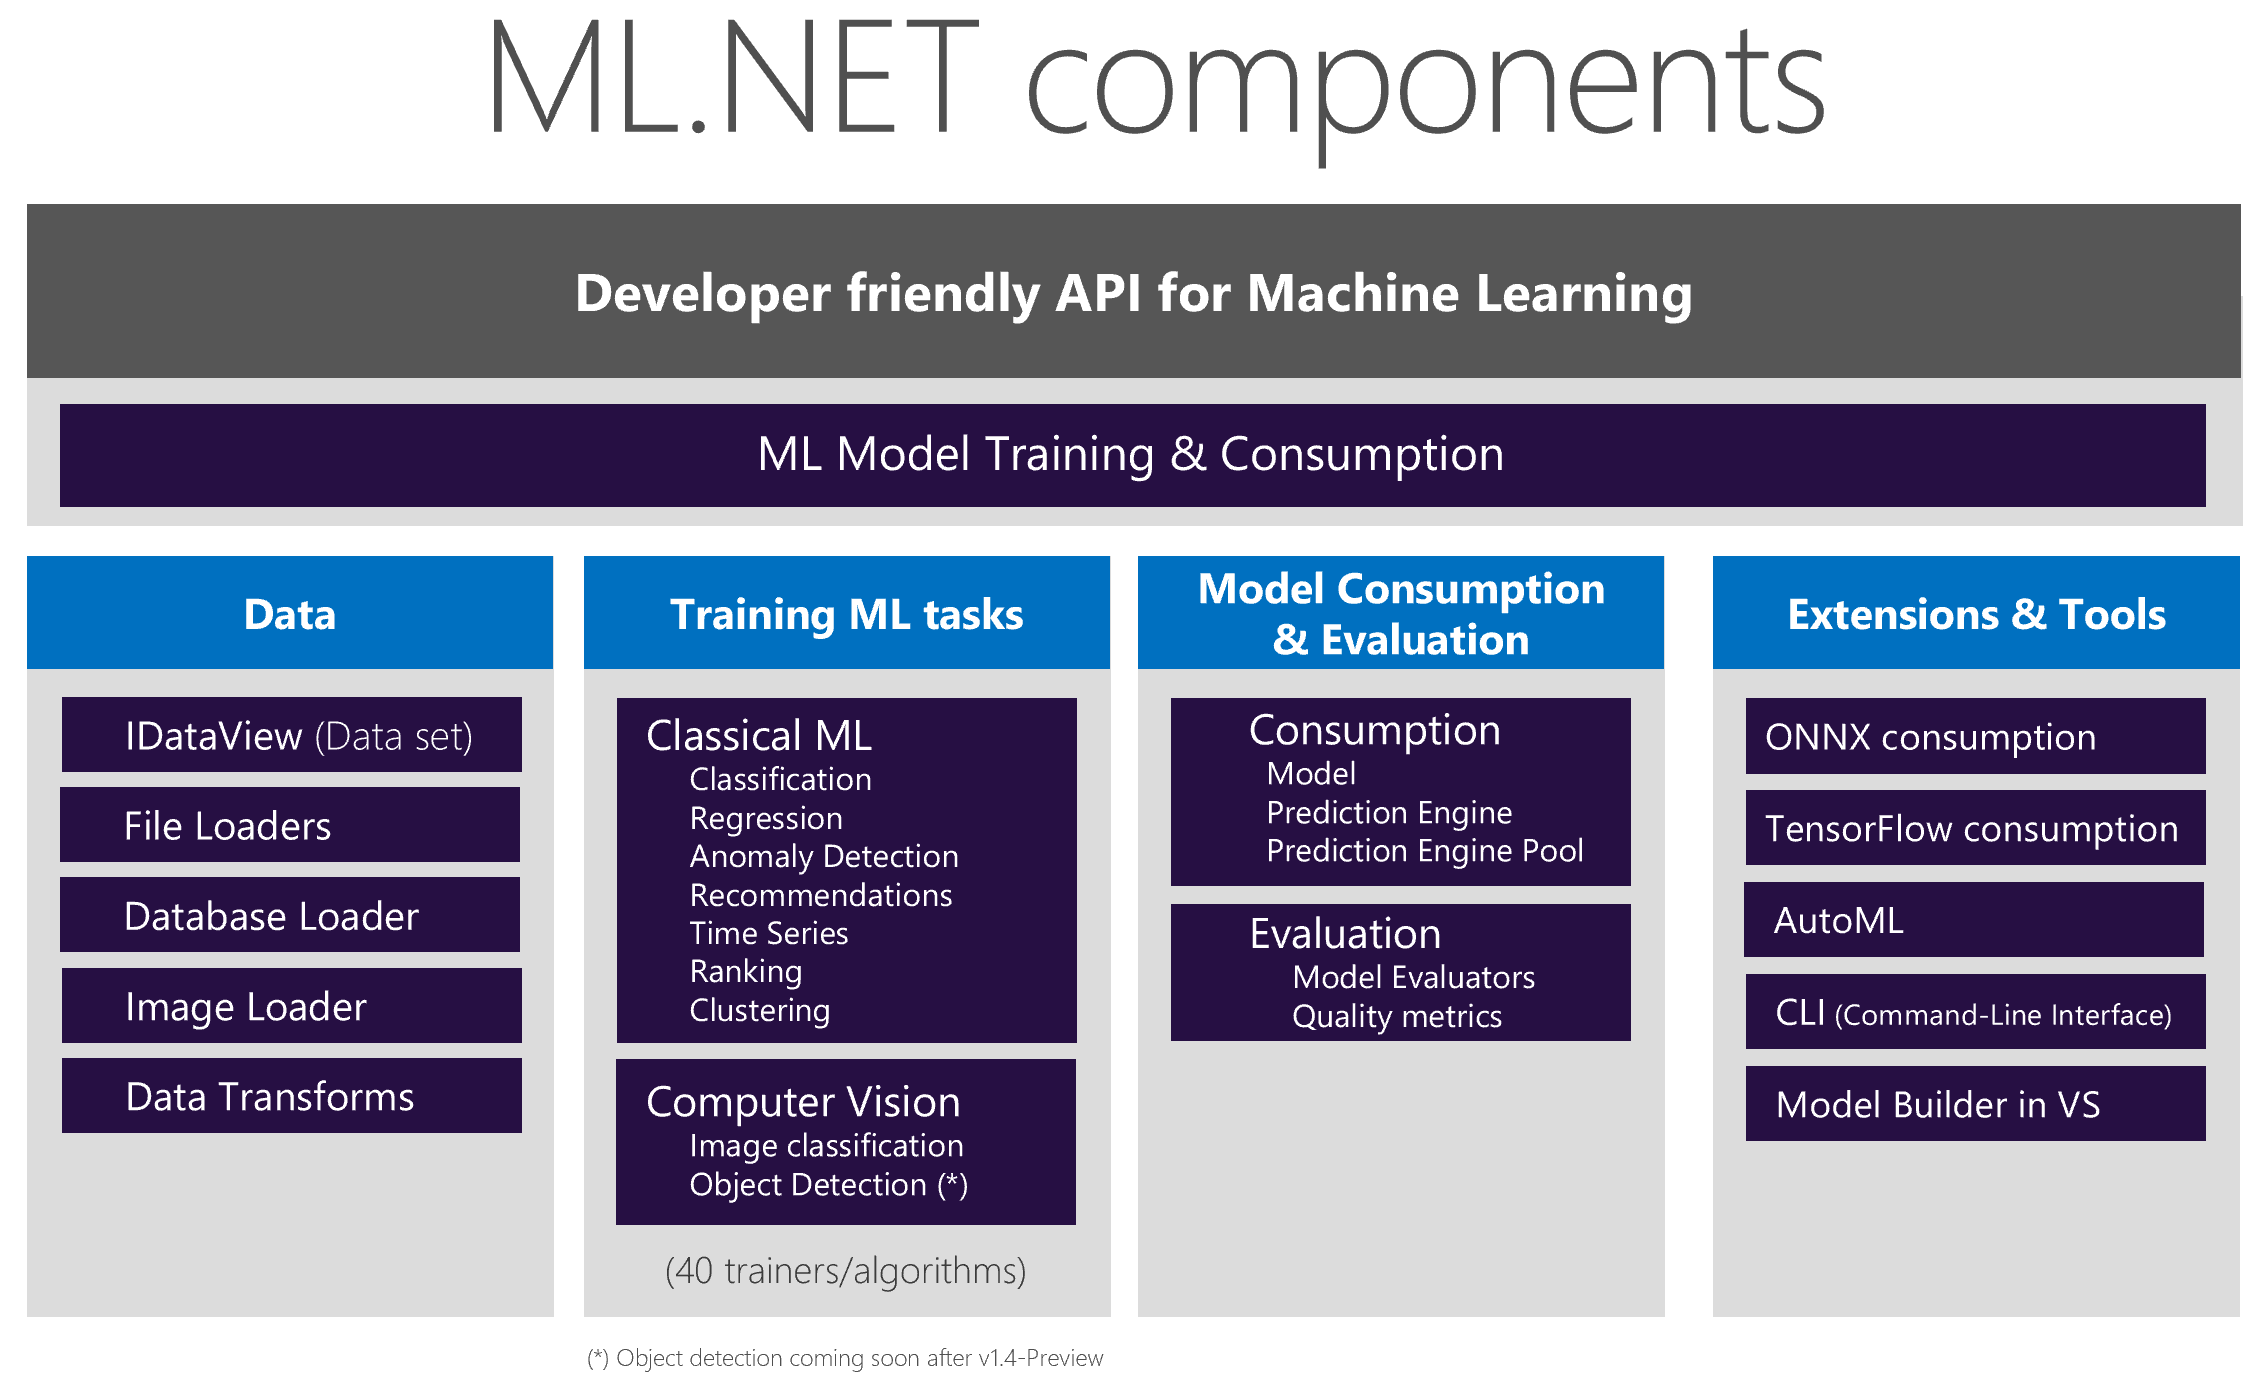 Figure 2: ML.NET components